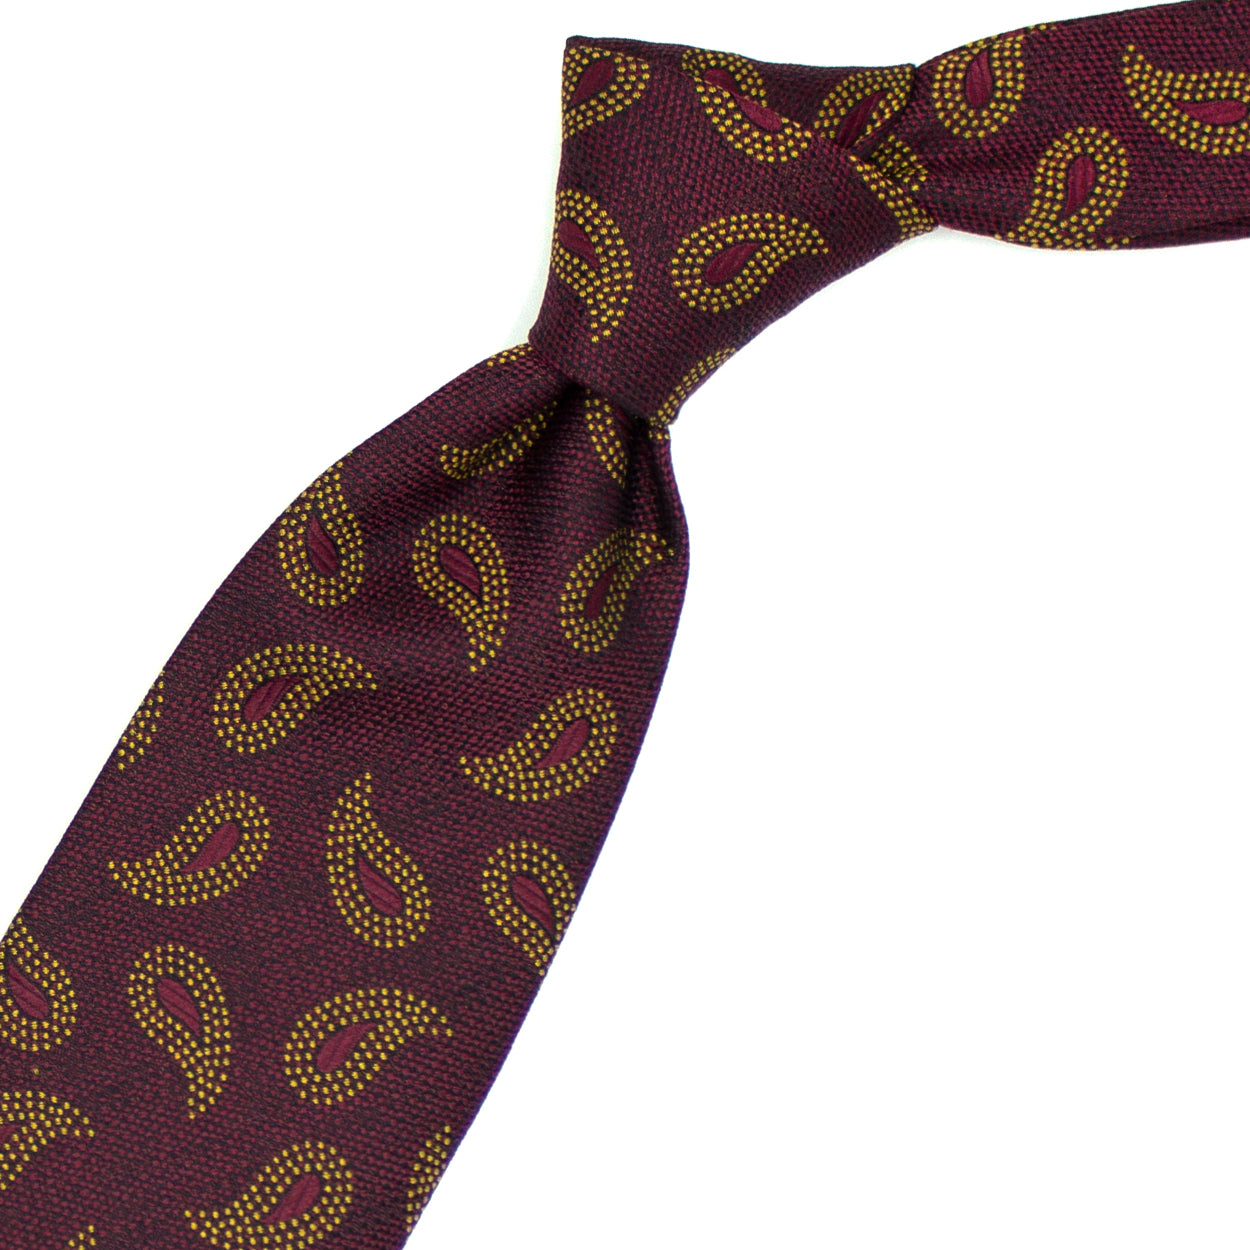 Bordeaux tie with yellow paisleys